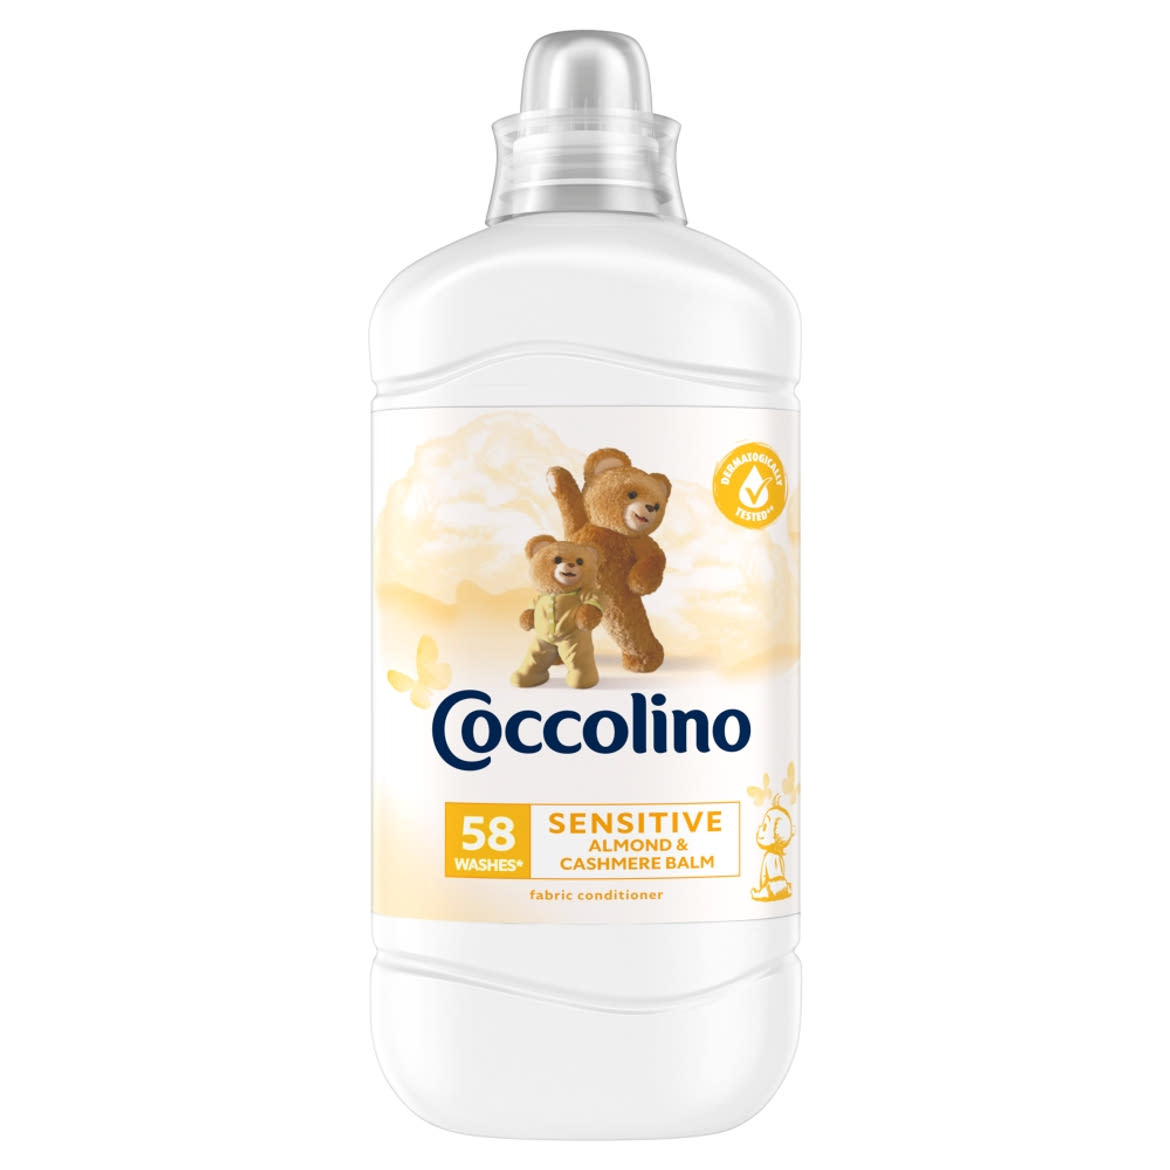 Coccolino Sensitive Almond & Cashmere Balm öblítőkoncentrátum 58 mosás